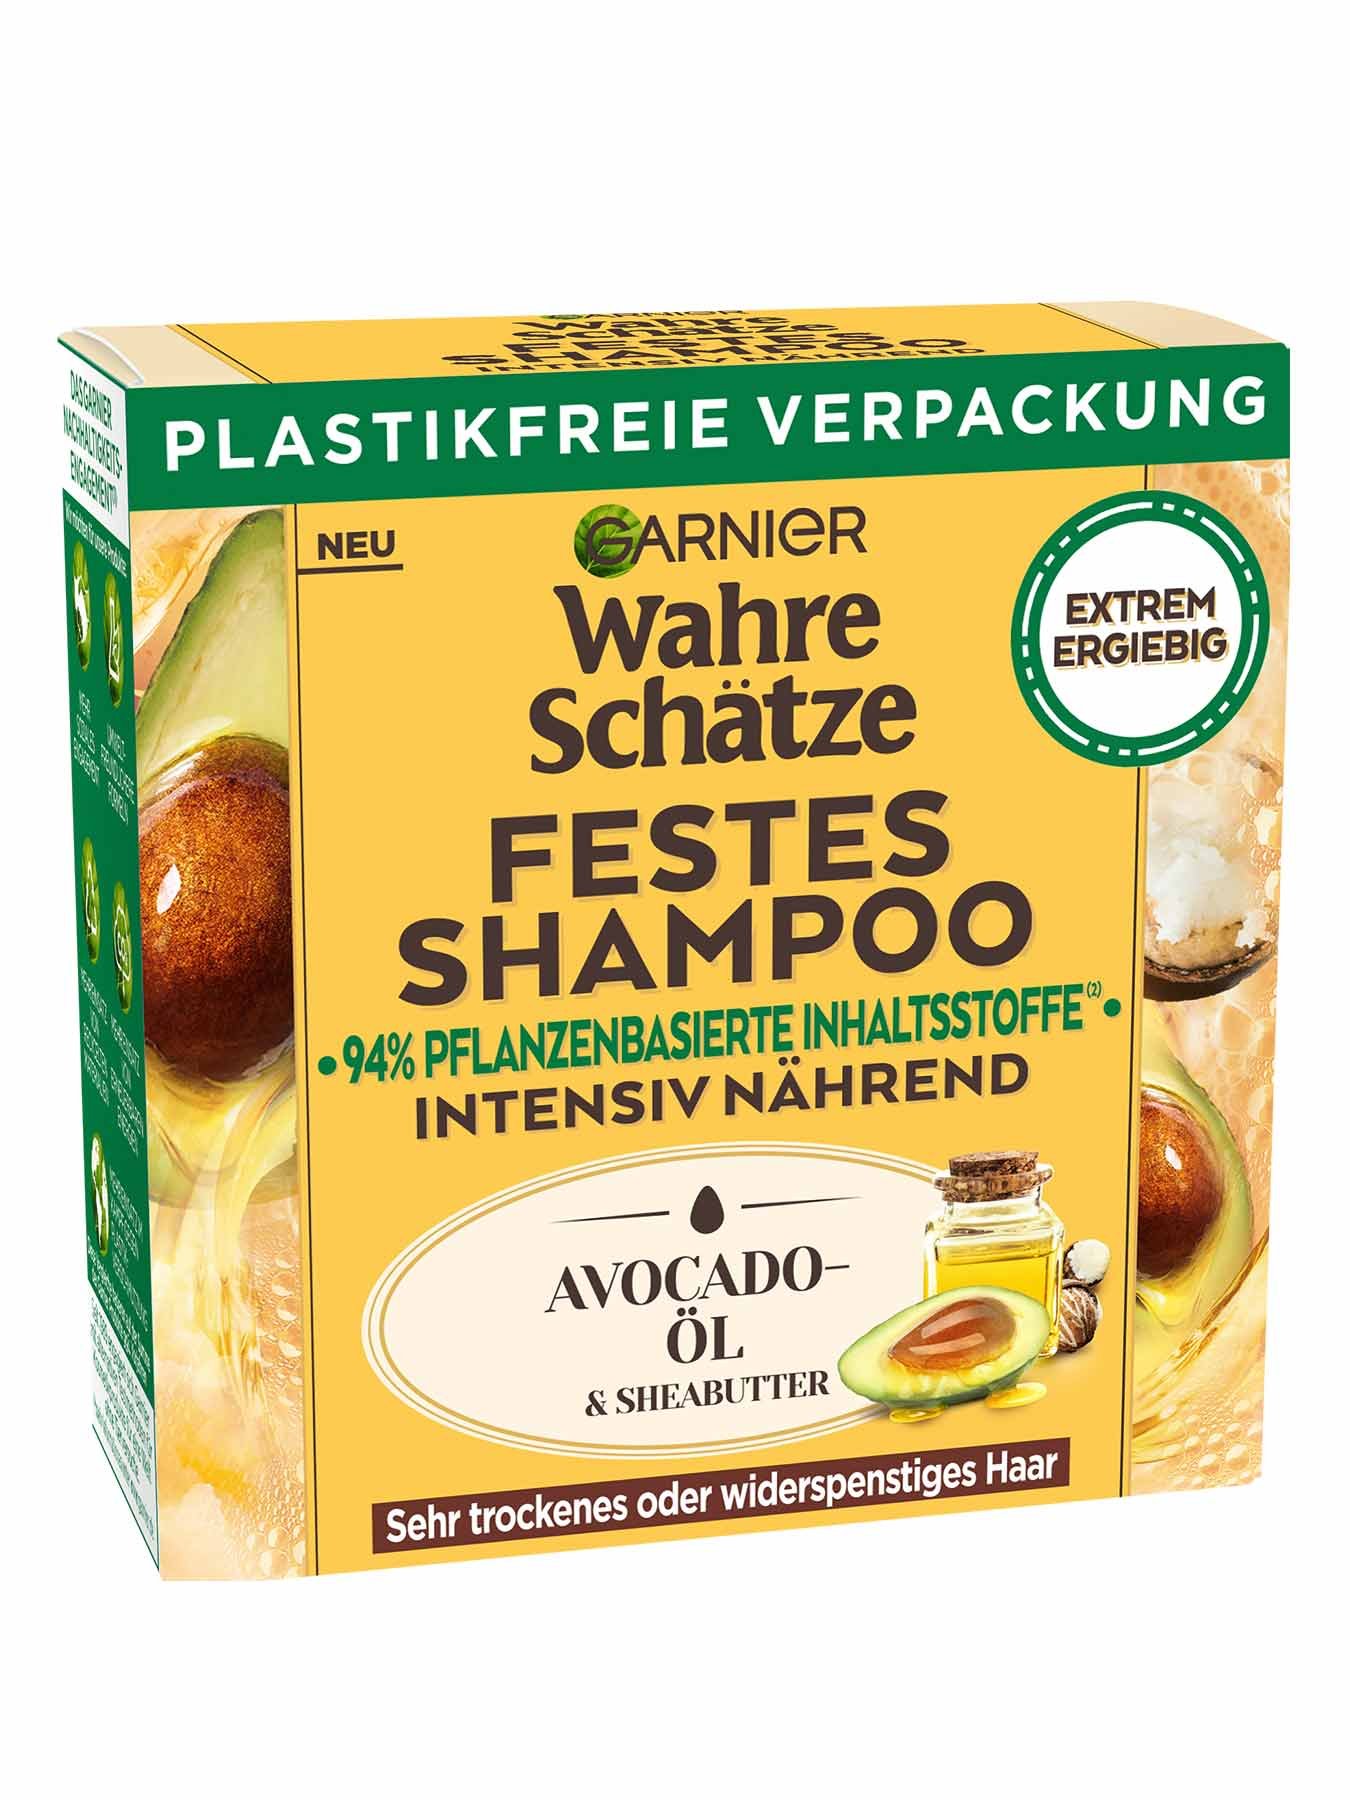 Garnier Wahre Schätze Festes Shampoo Avocado - Produktabbildung